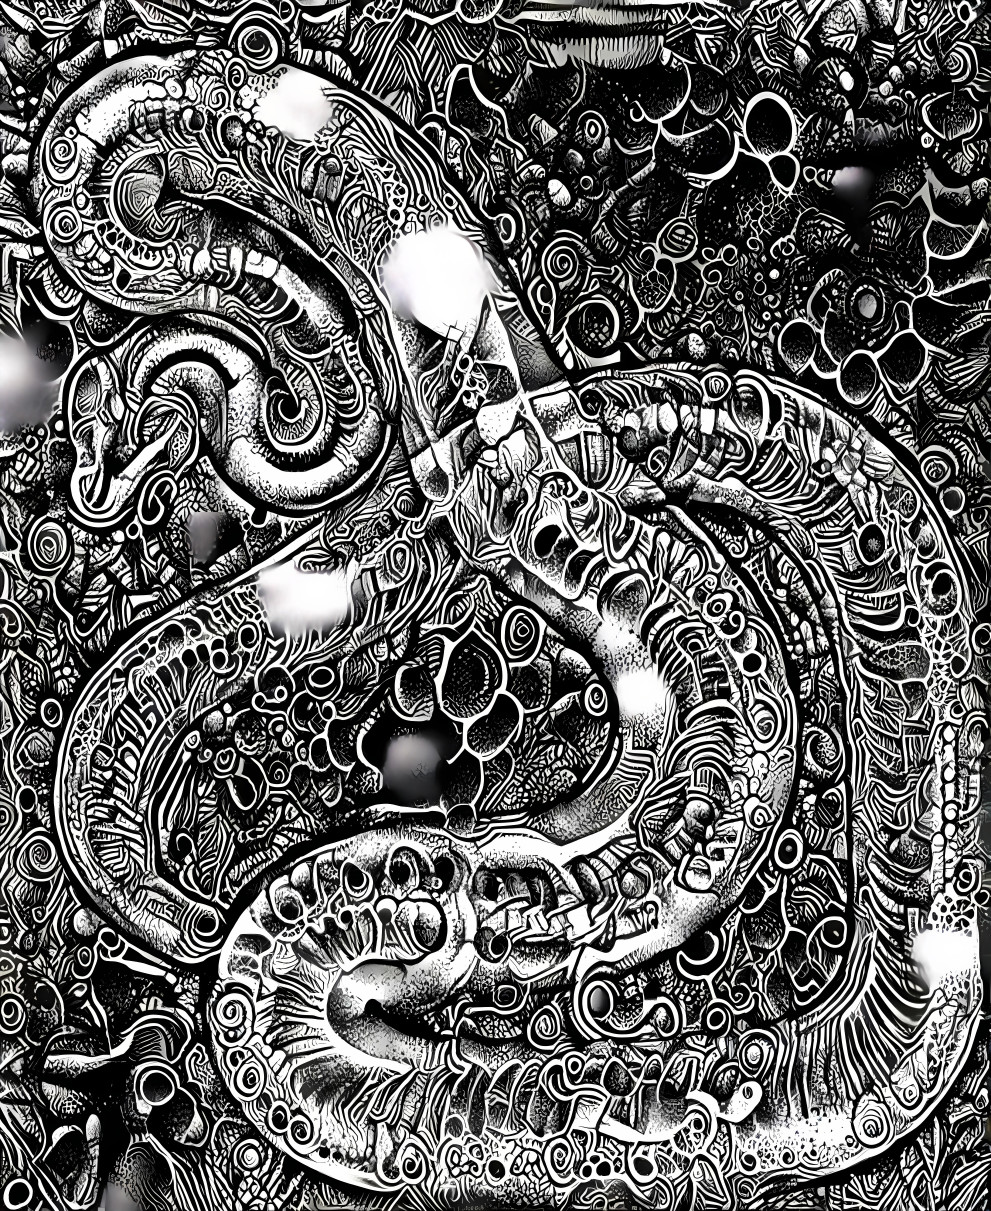 snake xray retextured b&w doodle art